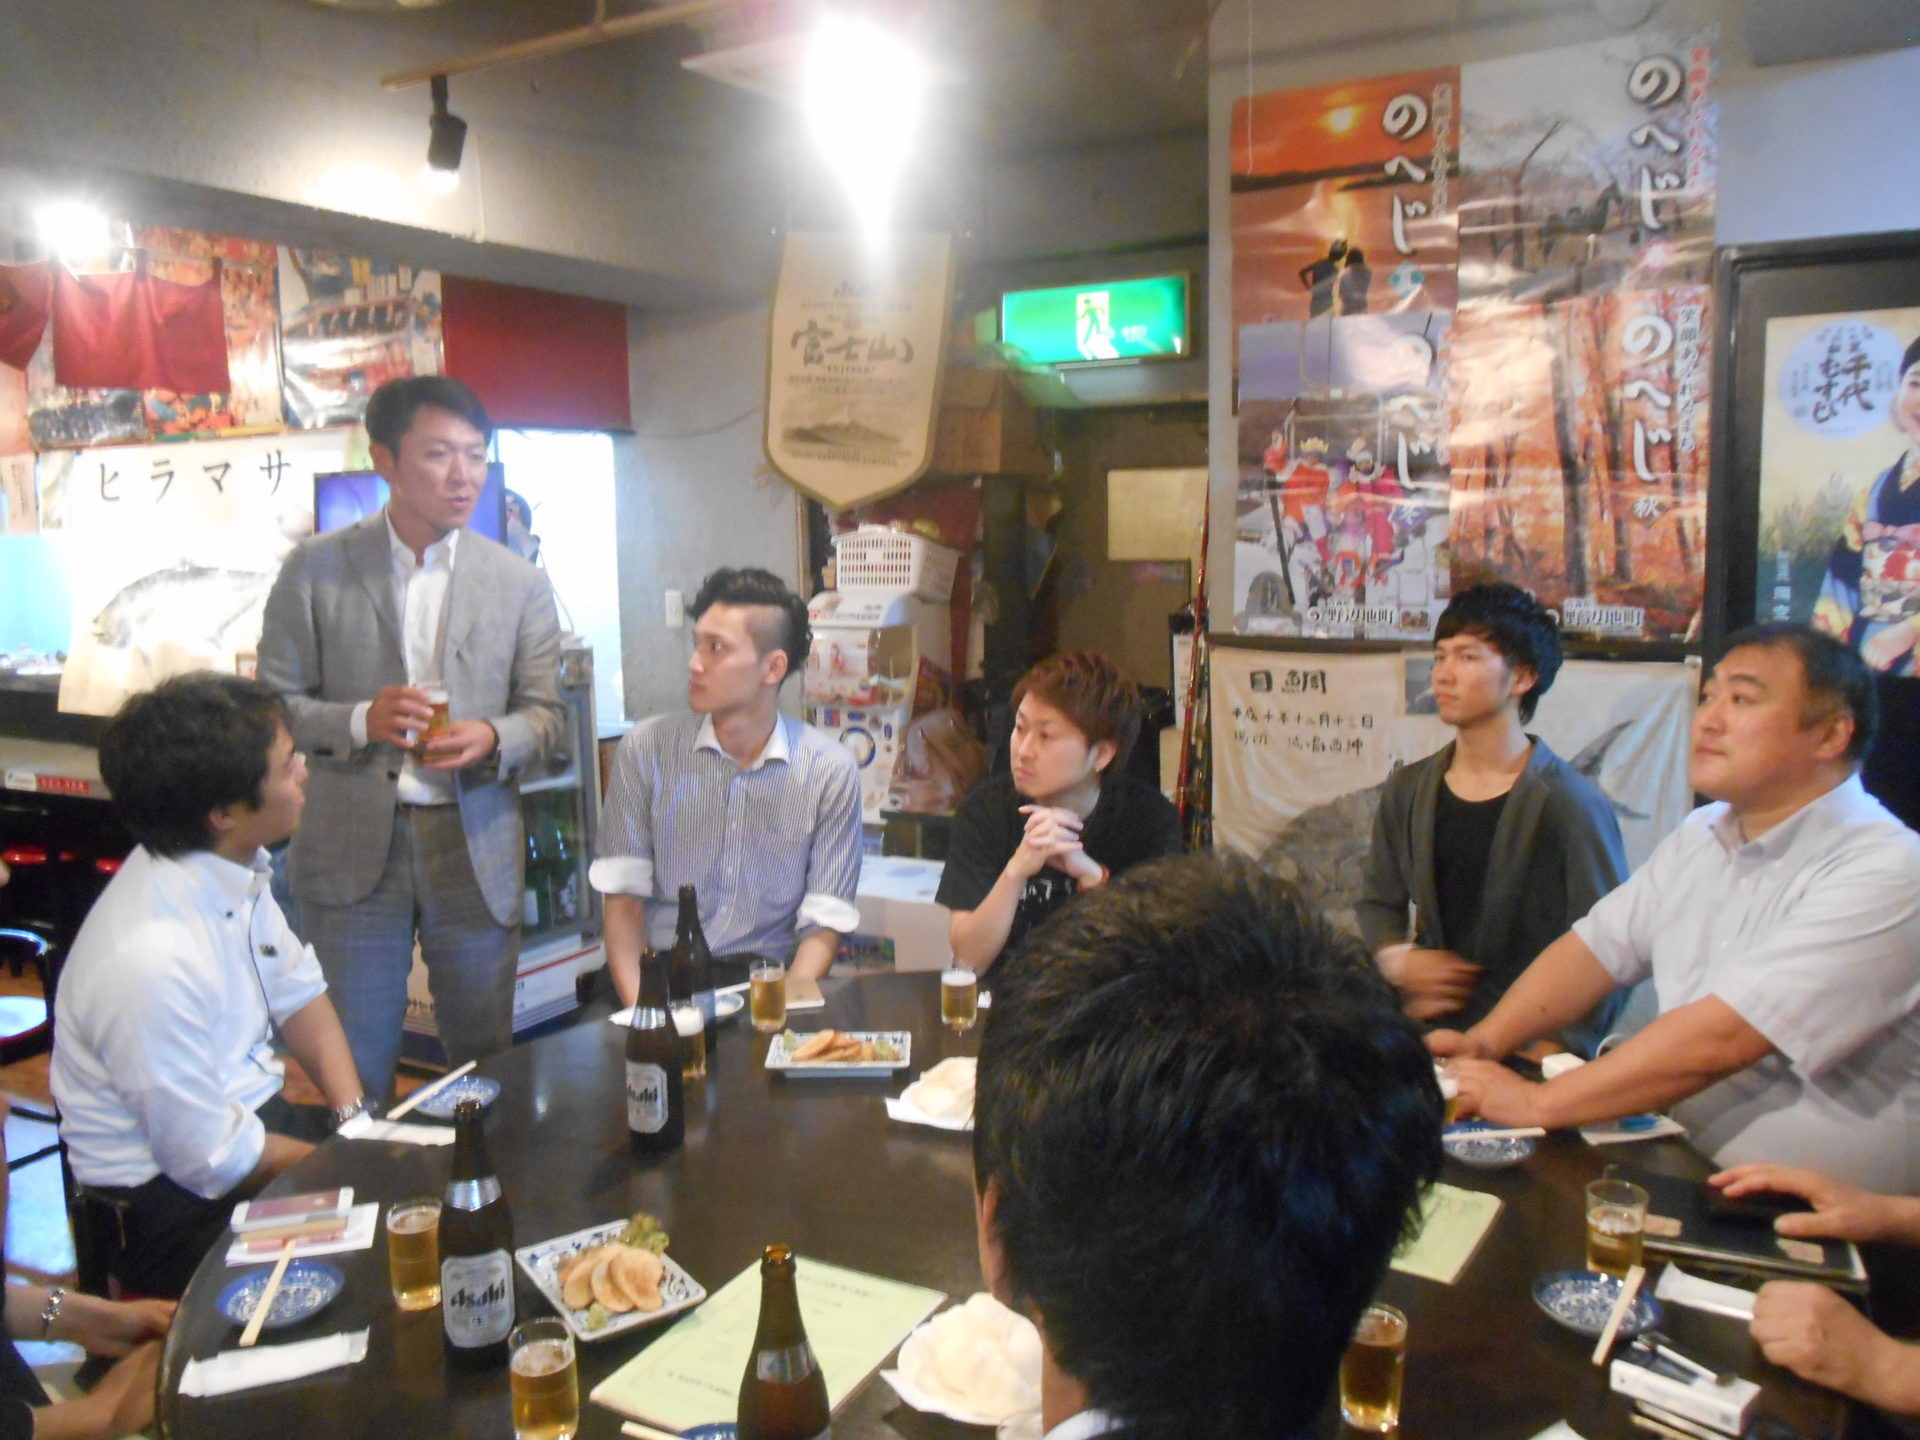 DSCN5584 1920x1440 - 2015年9月14日 AOsuki定例飲み会開催しました。